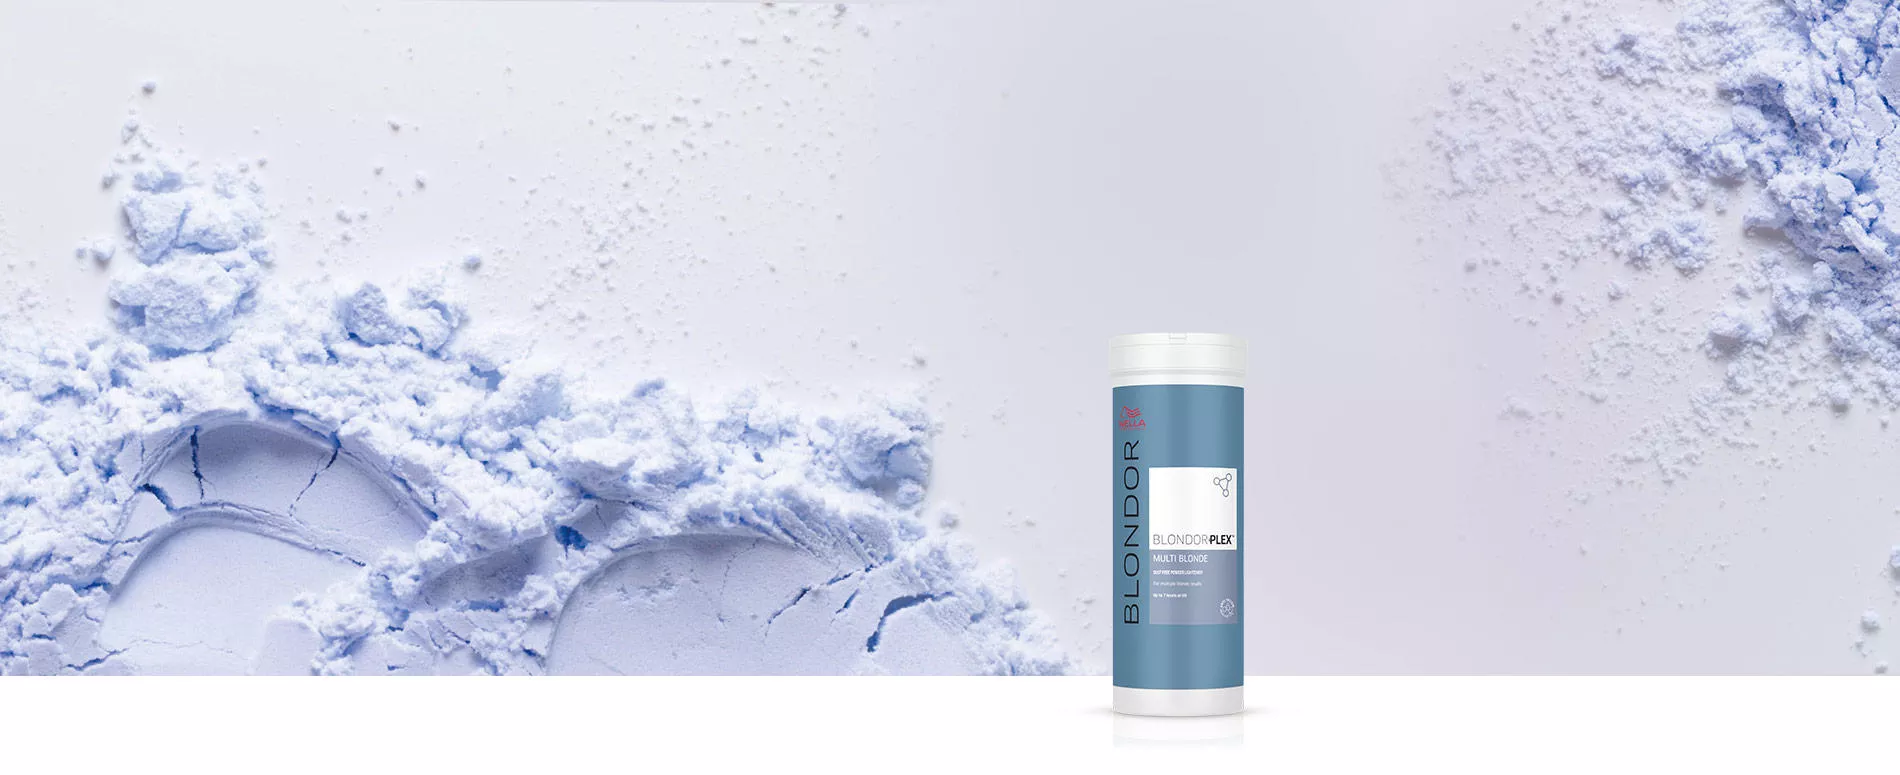 Packshot of Blondorplex surrounded by blue powder on a grey background